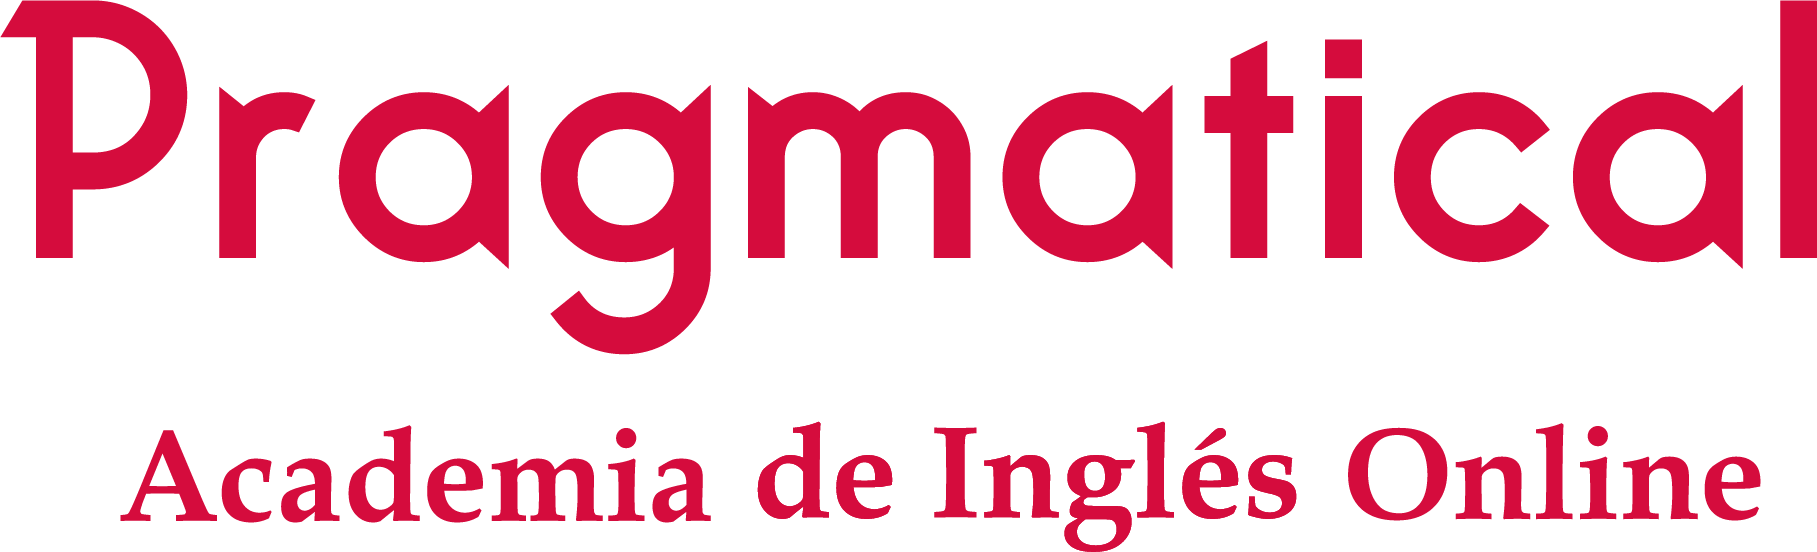 Pragmatical Academia de Inglés Online